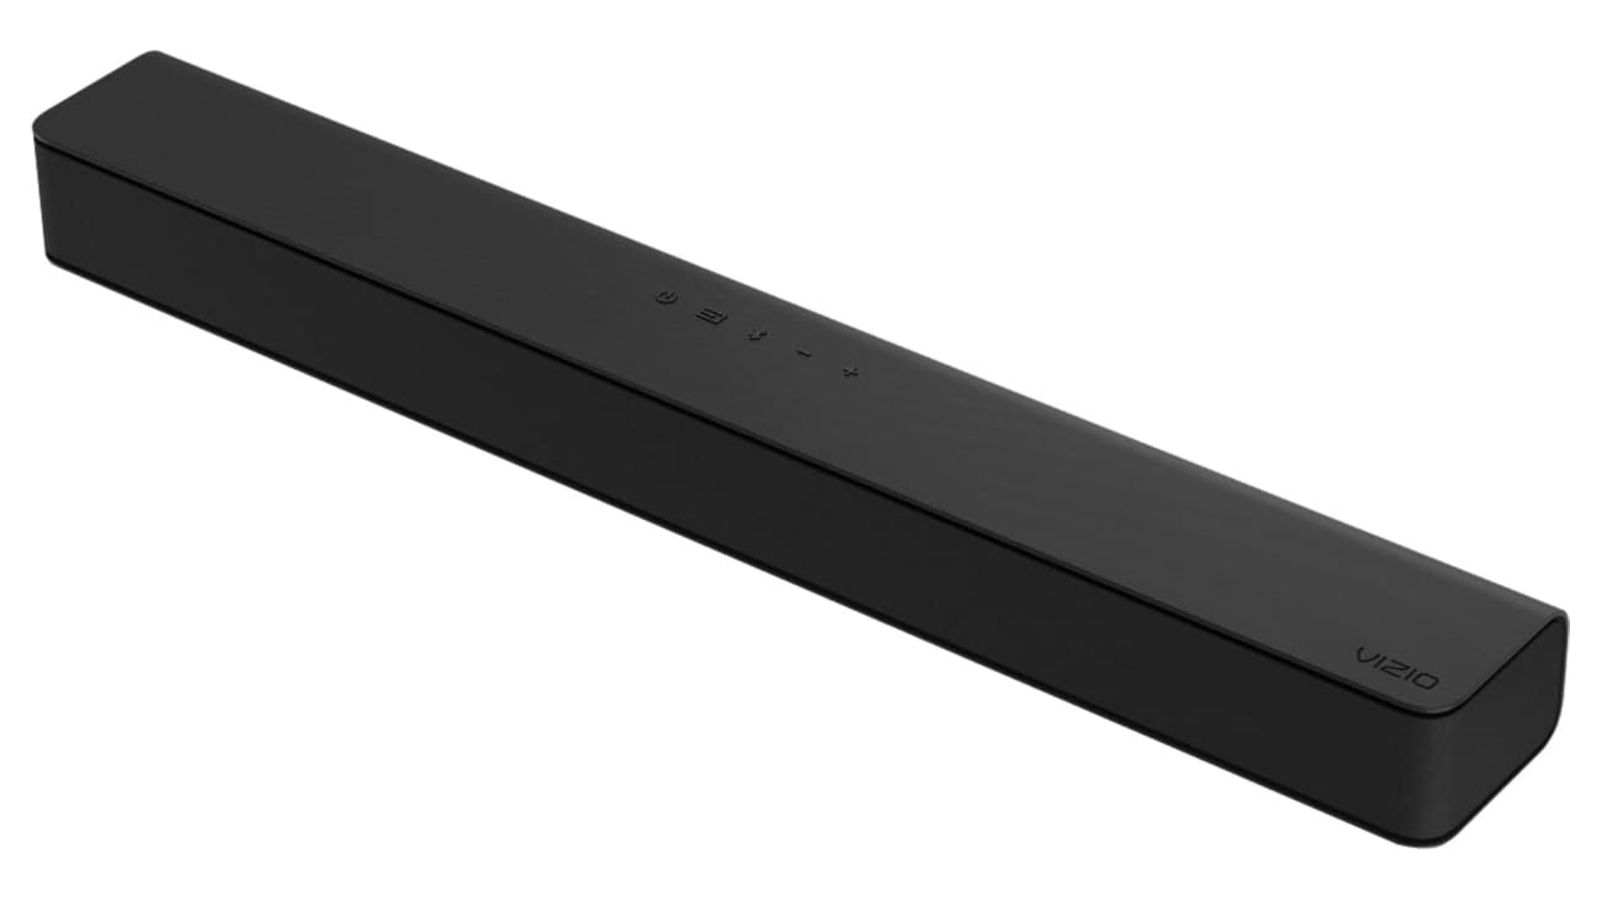 VIZIO V-Series 2.0 product image of a long, black, rectangular soundbar.